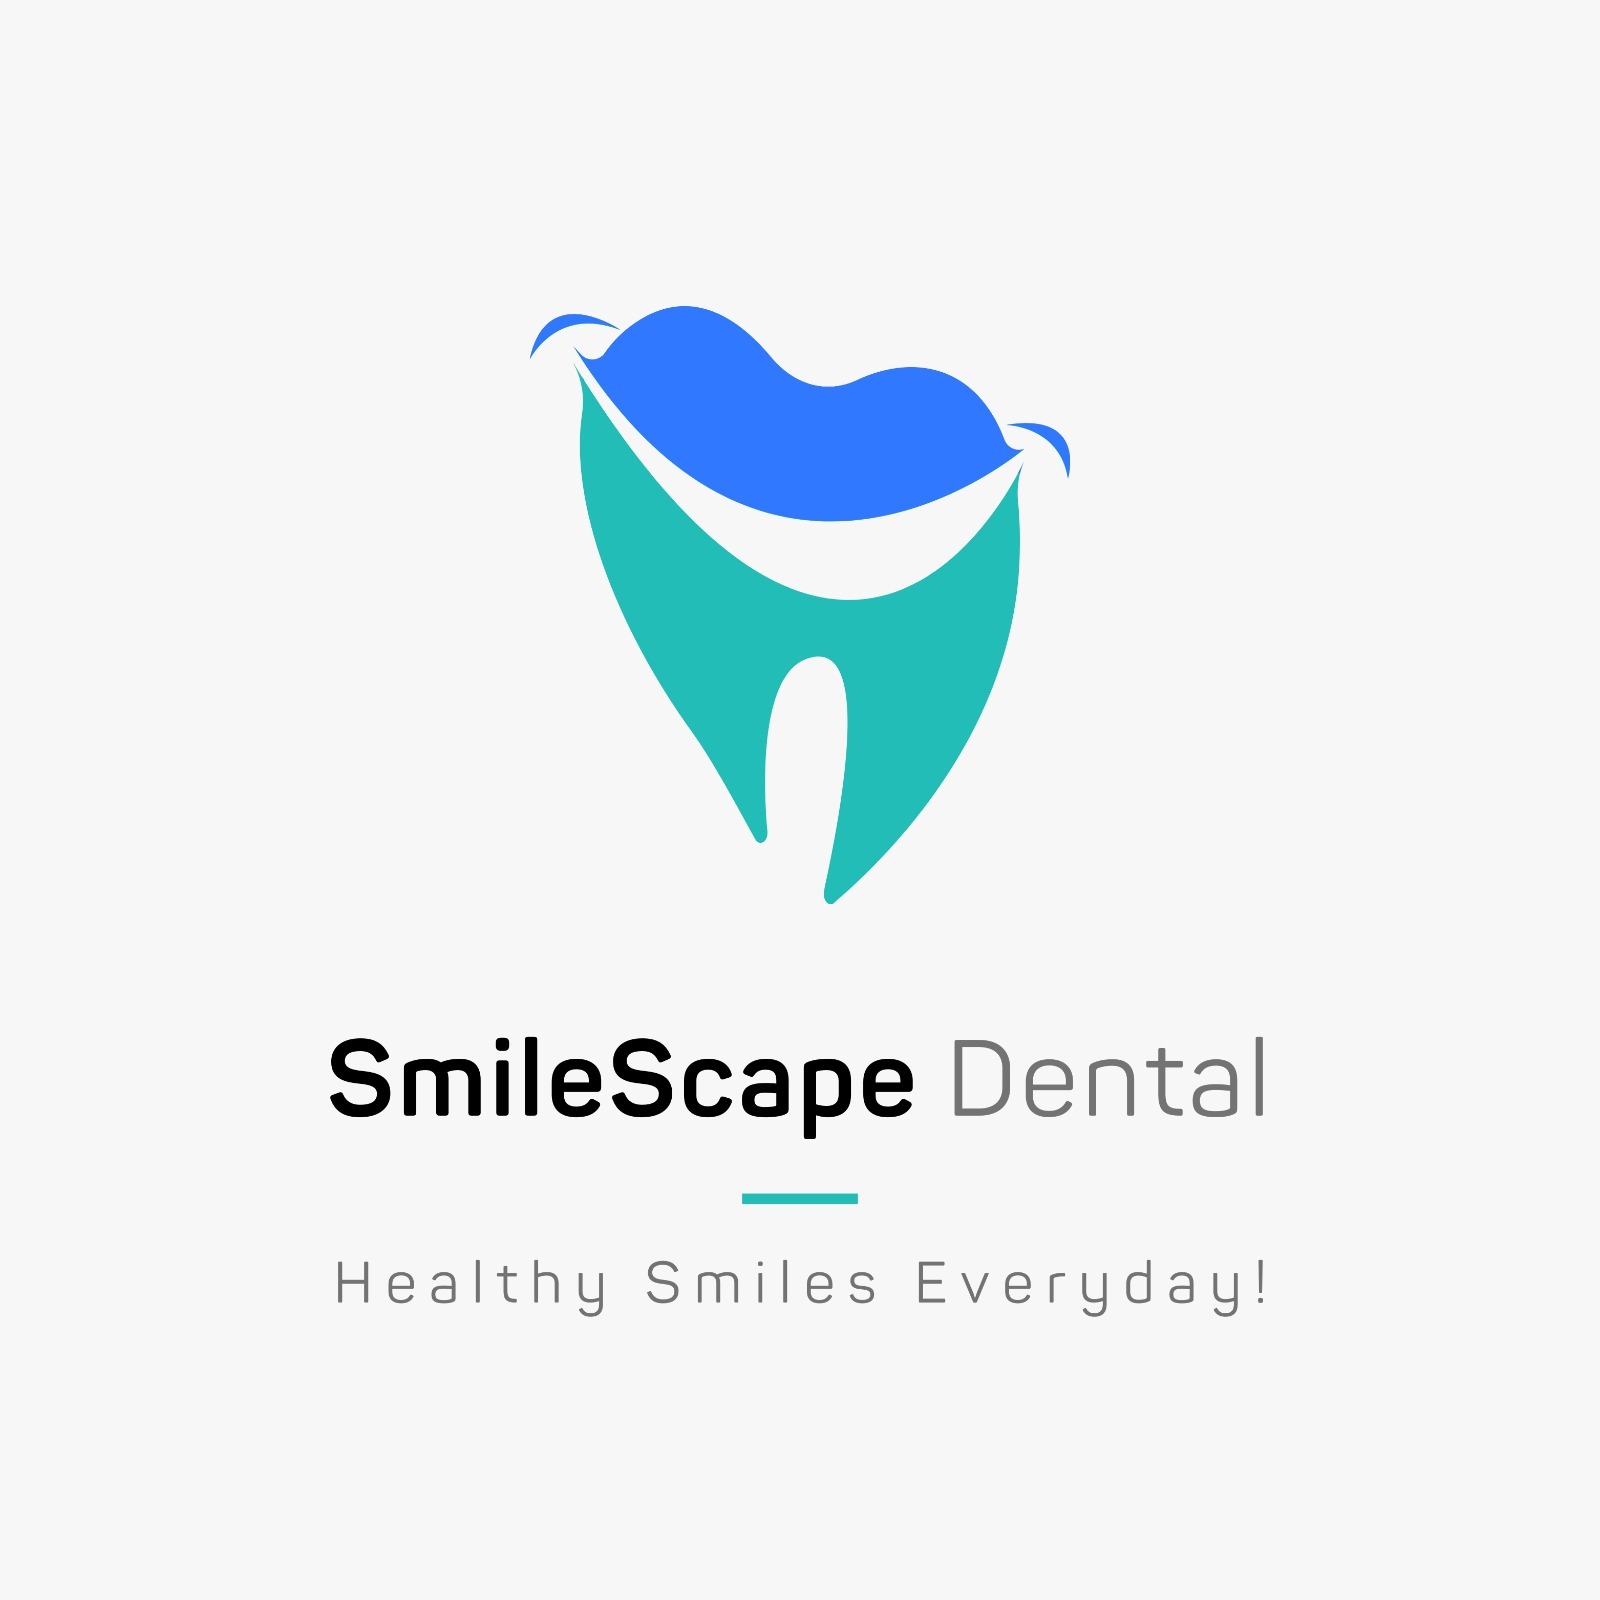 SmileScape Dental|Clinics|Medical Services